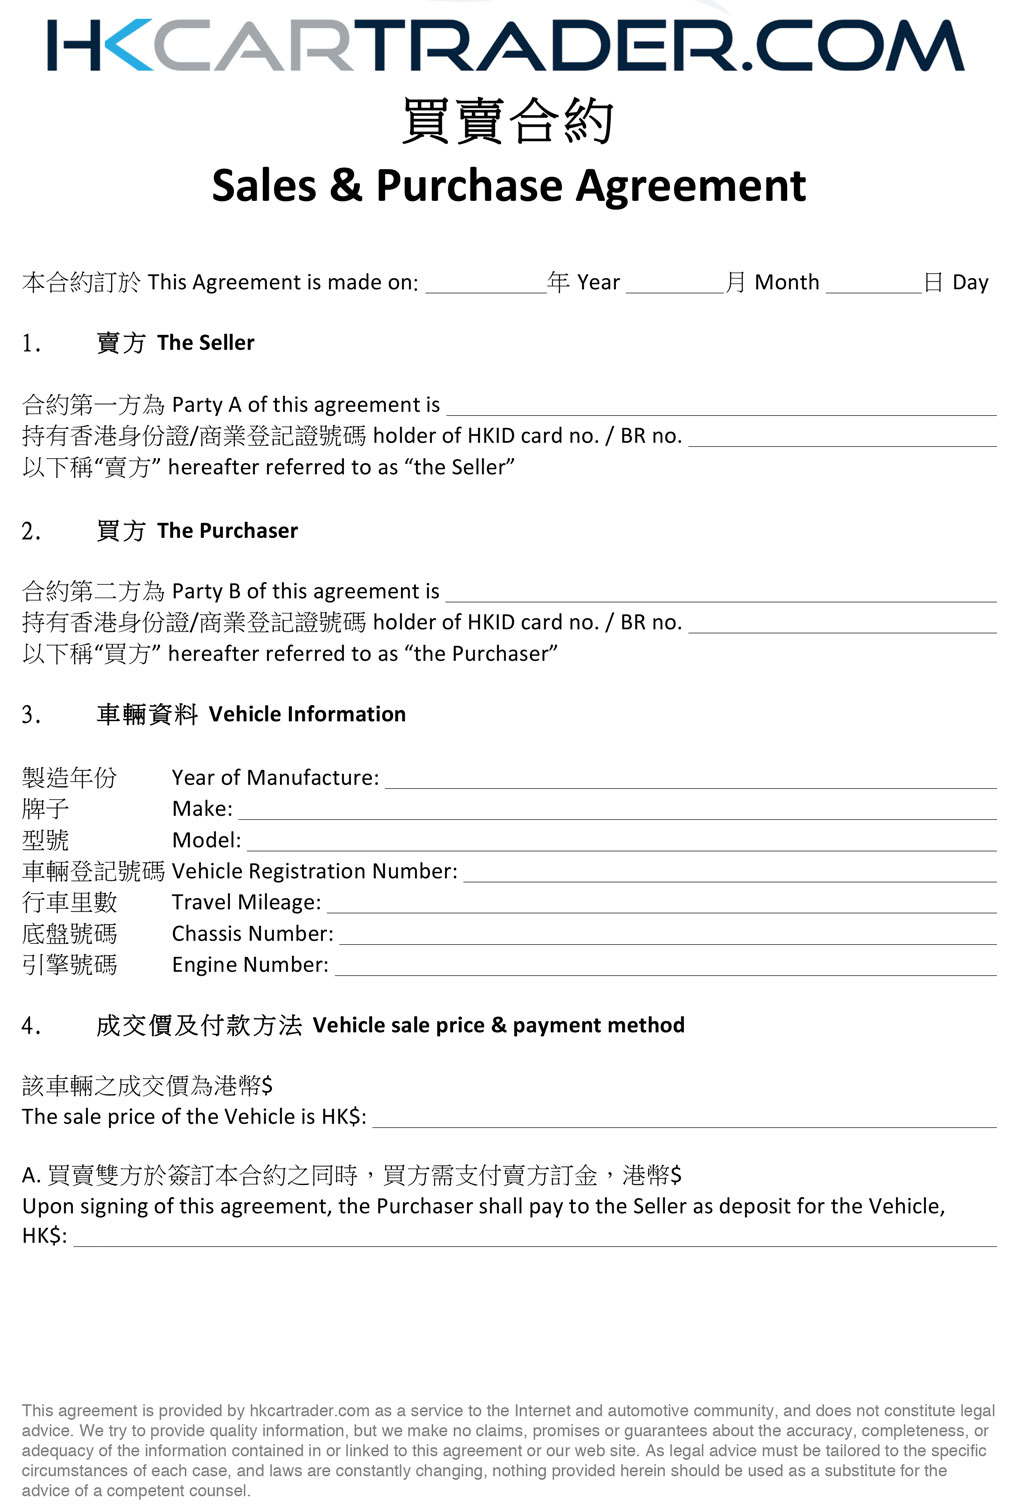 Used car sales & purchase agreement 二手車臨時買賣合約